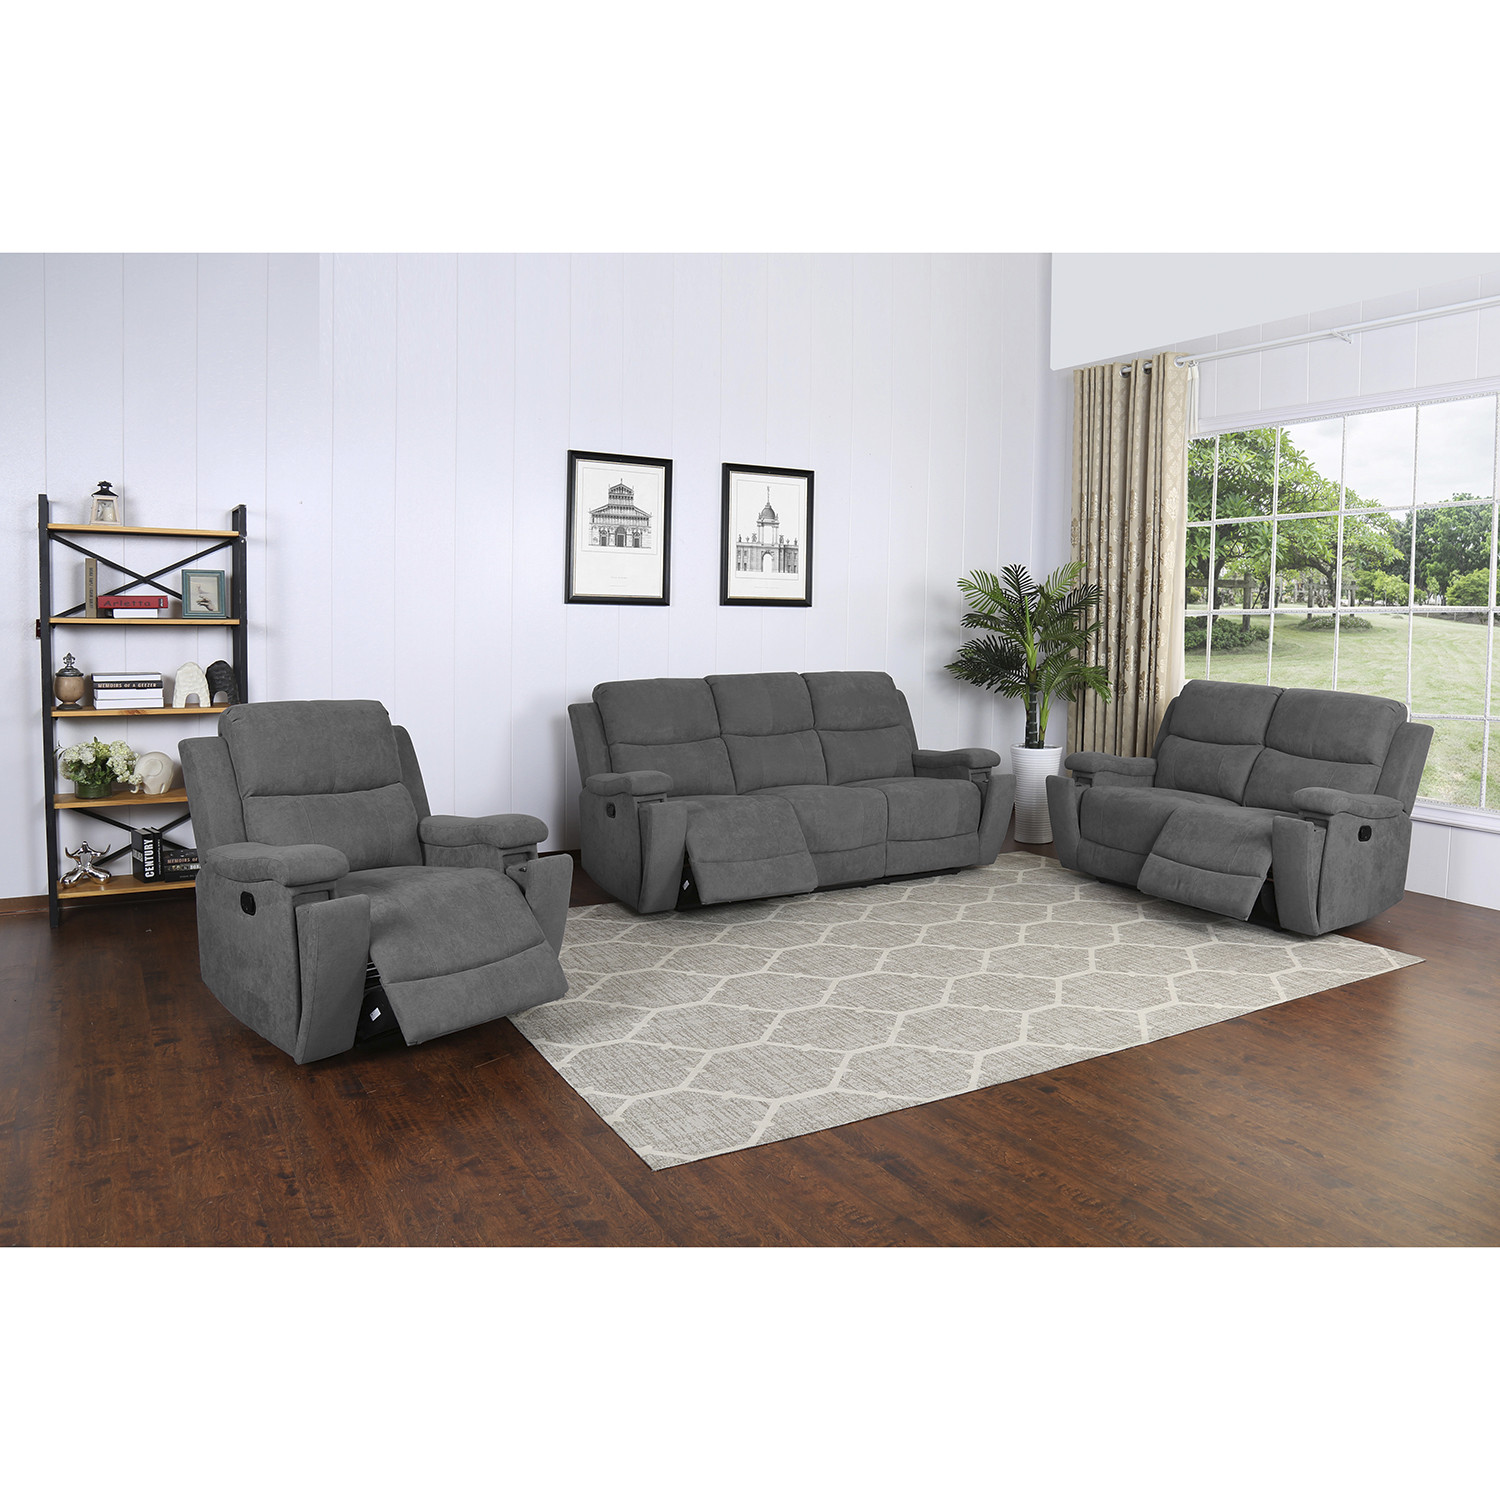 Ledbury 3 Seater Dark Grey Fabric Manual Recliner Sofa Image 2